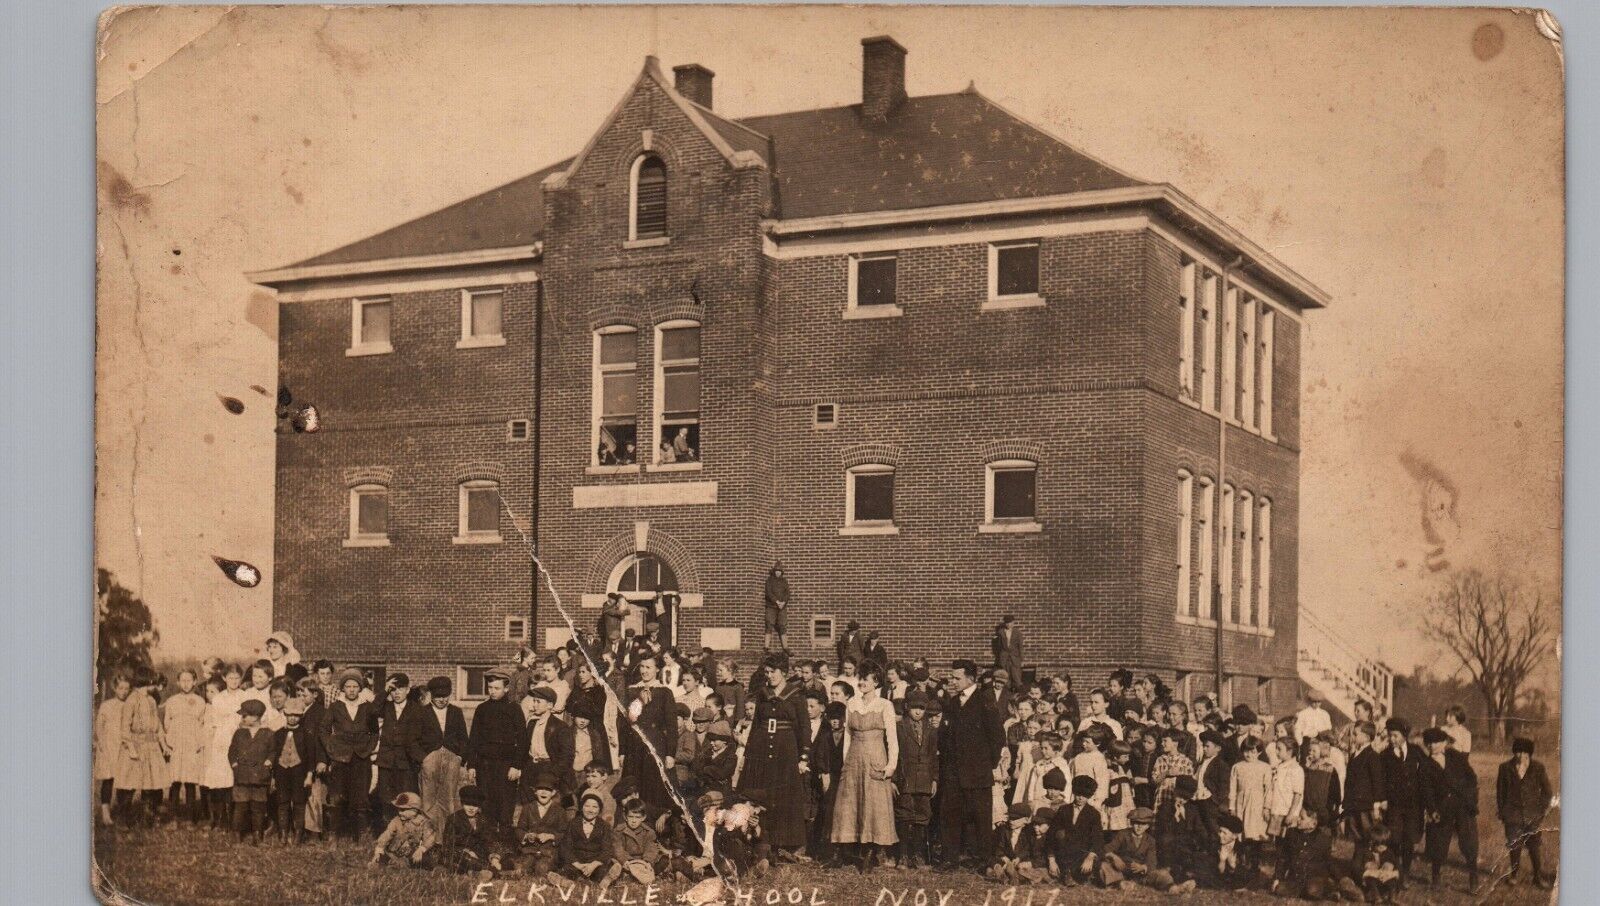 ELKVILLE ILLINOIS PUBLIC SCHOOL 1917 real photo postcard rppc il antique